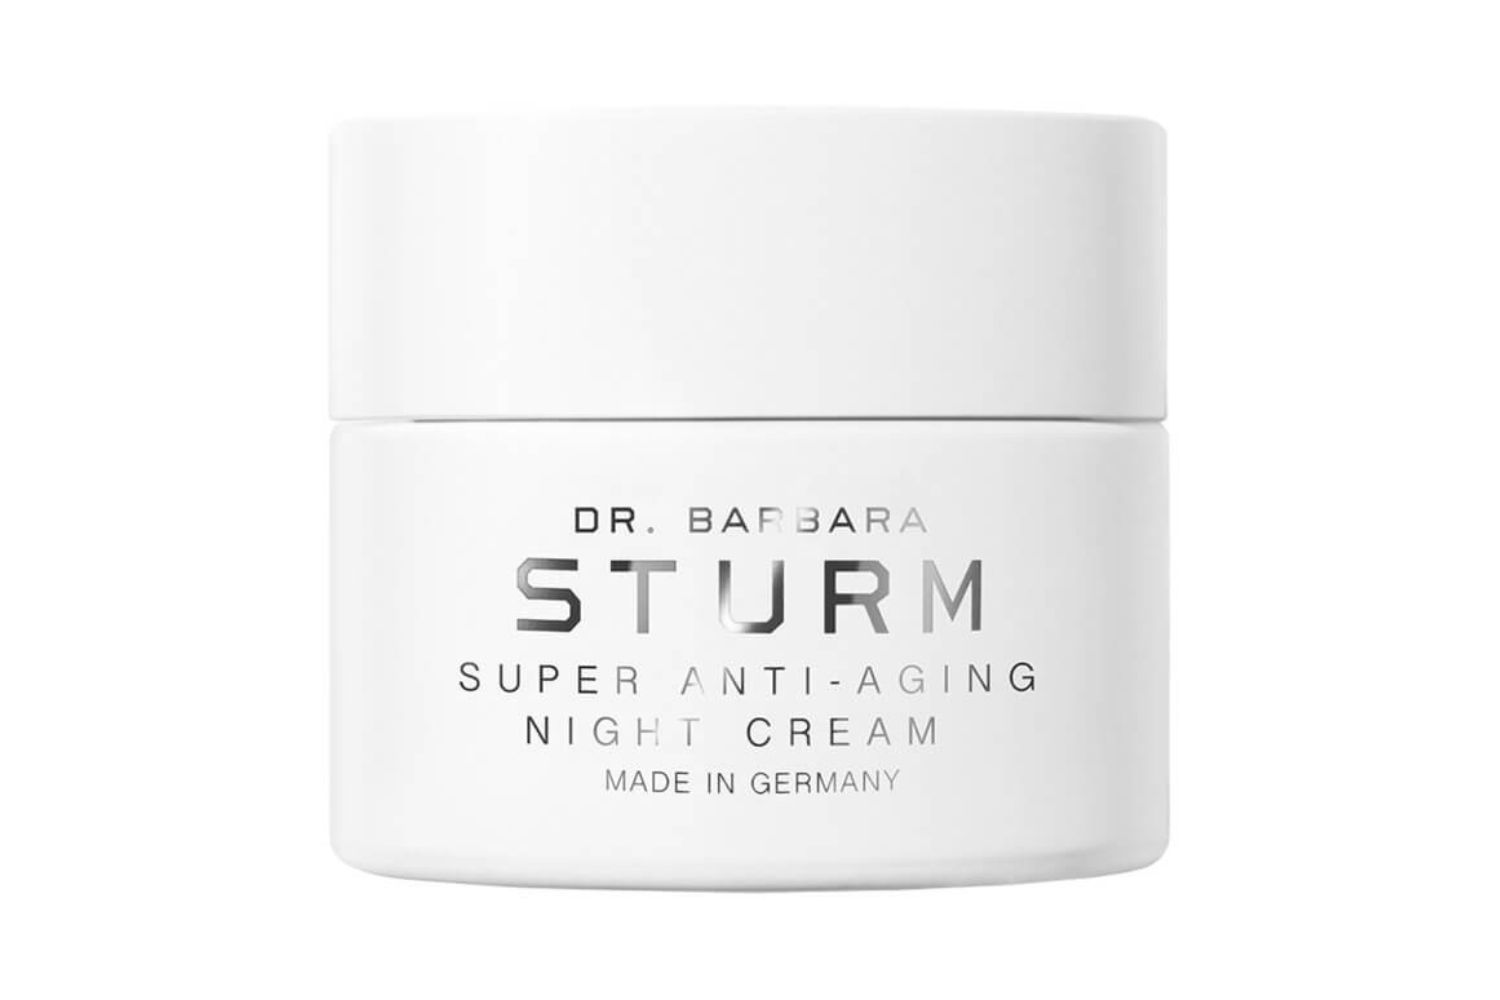 Dr Barbara Sturm Super Anti-Aging Night Cream, $454 at Mecca